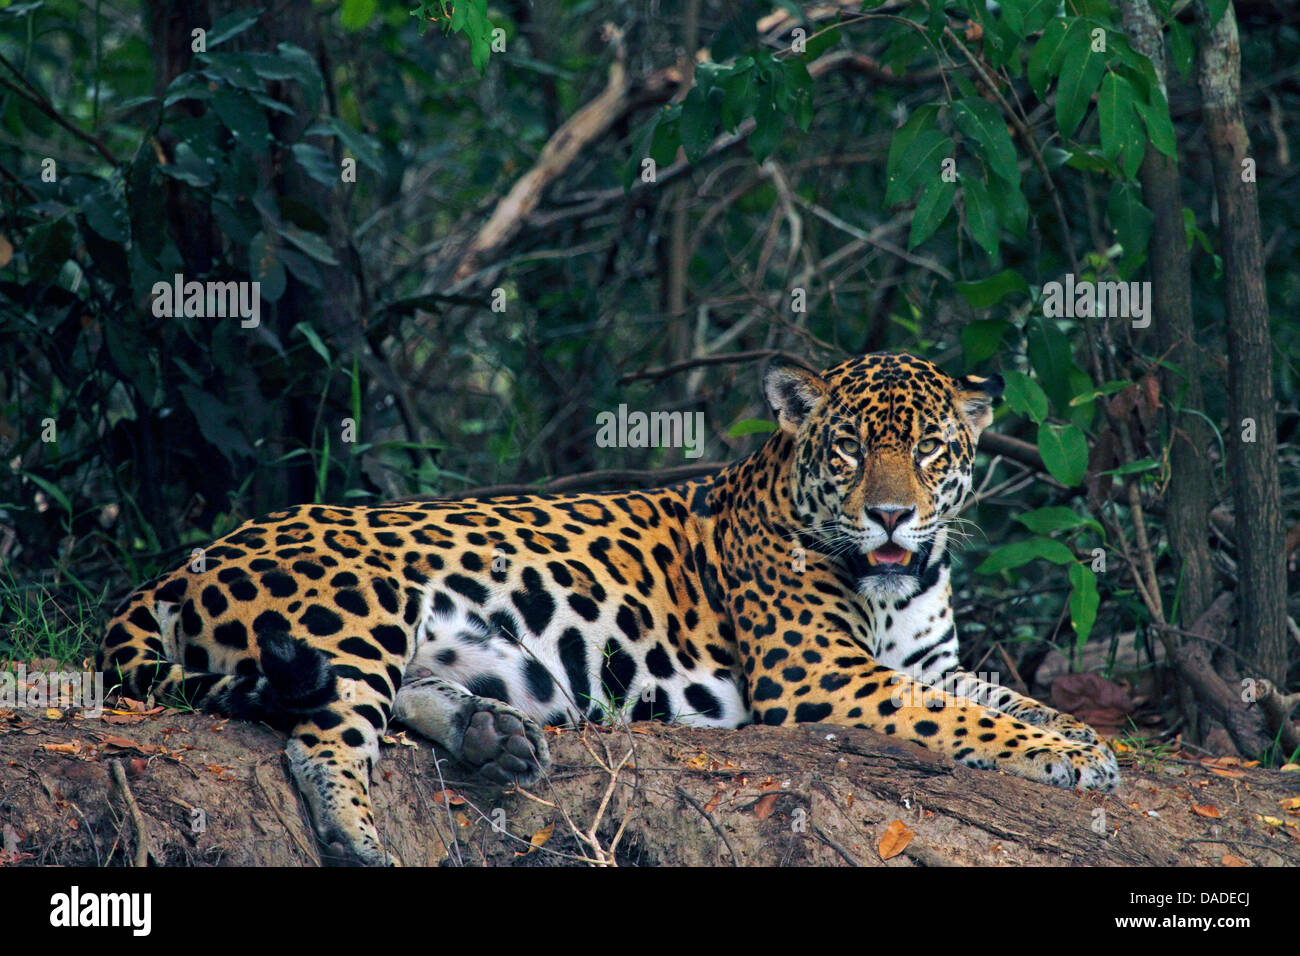 Jaguar (Panthera onca), el macho en el banco de arena, de Brasil, el Pantanal, río Cuiaba Foto de stock